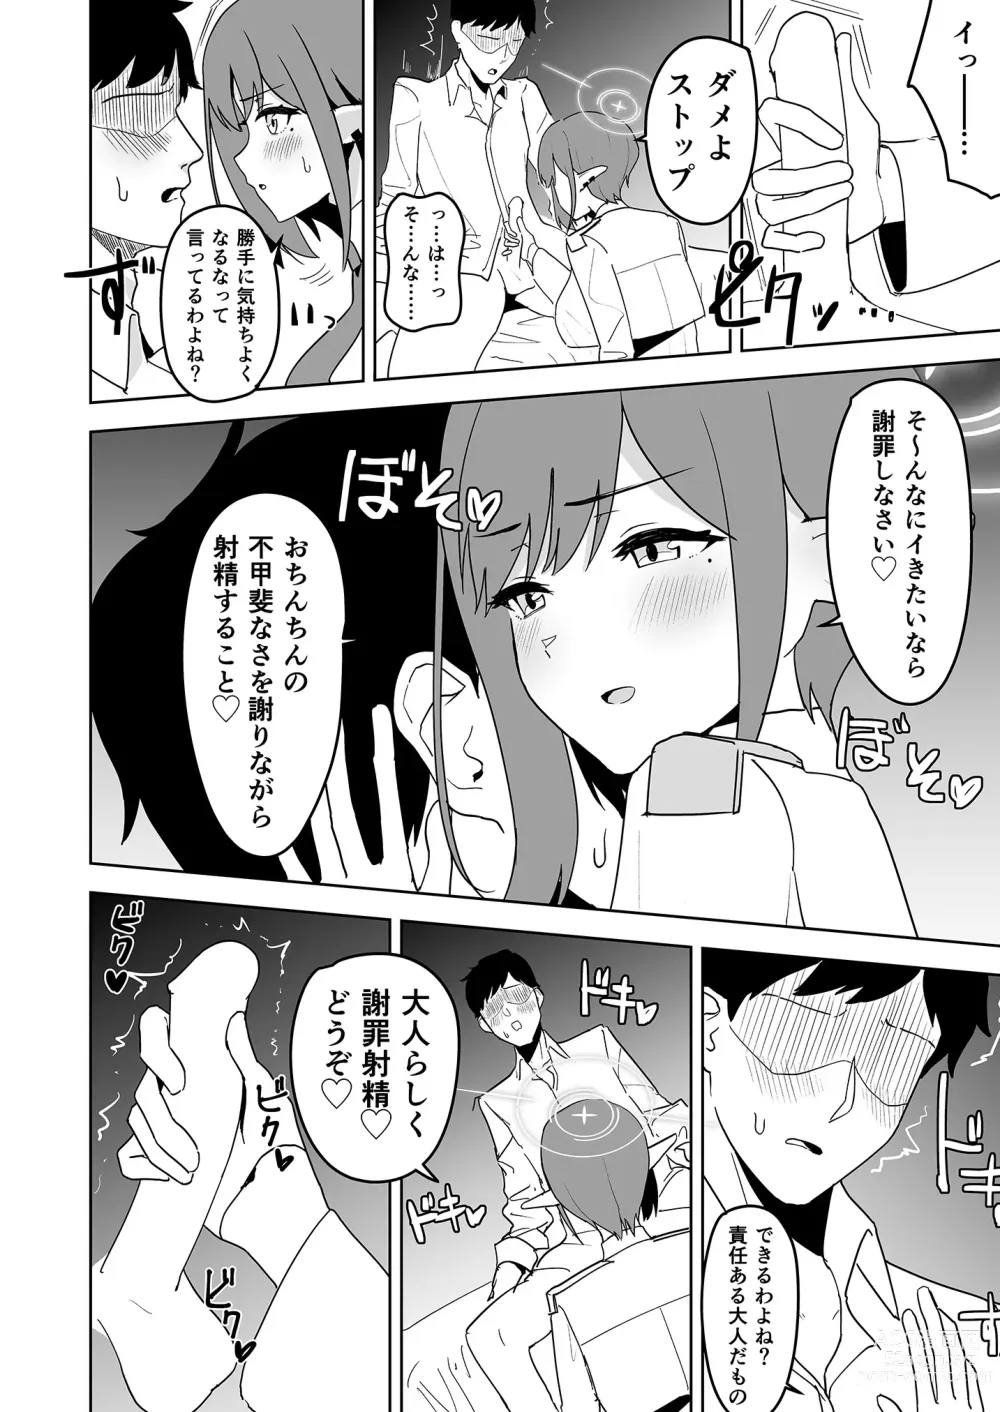 Page 13 of doujinshi Aoi ni Tekoki Shite Moraou - Lets Aoi give you a hand job.